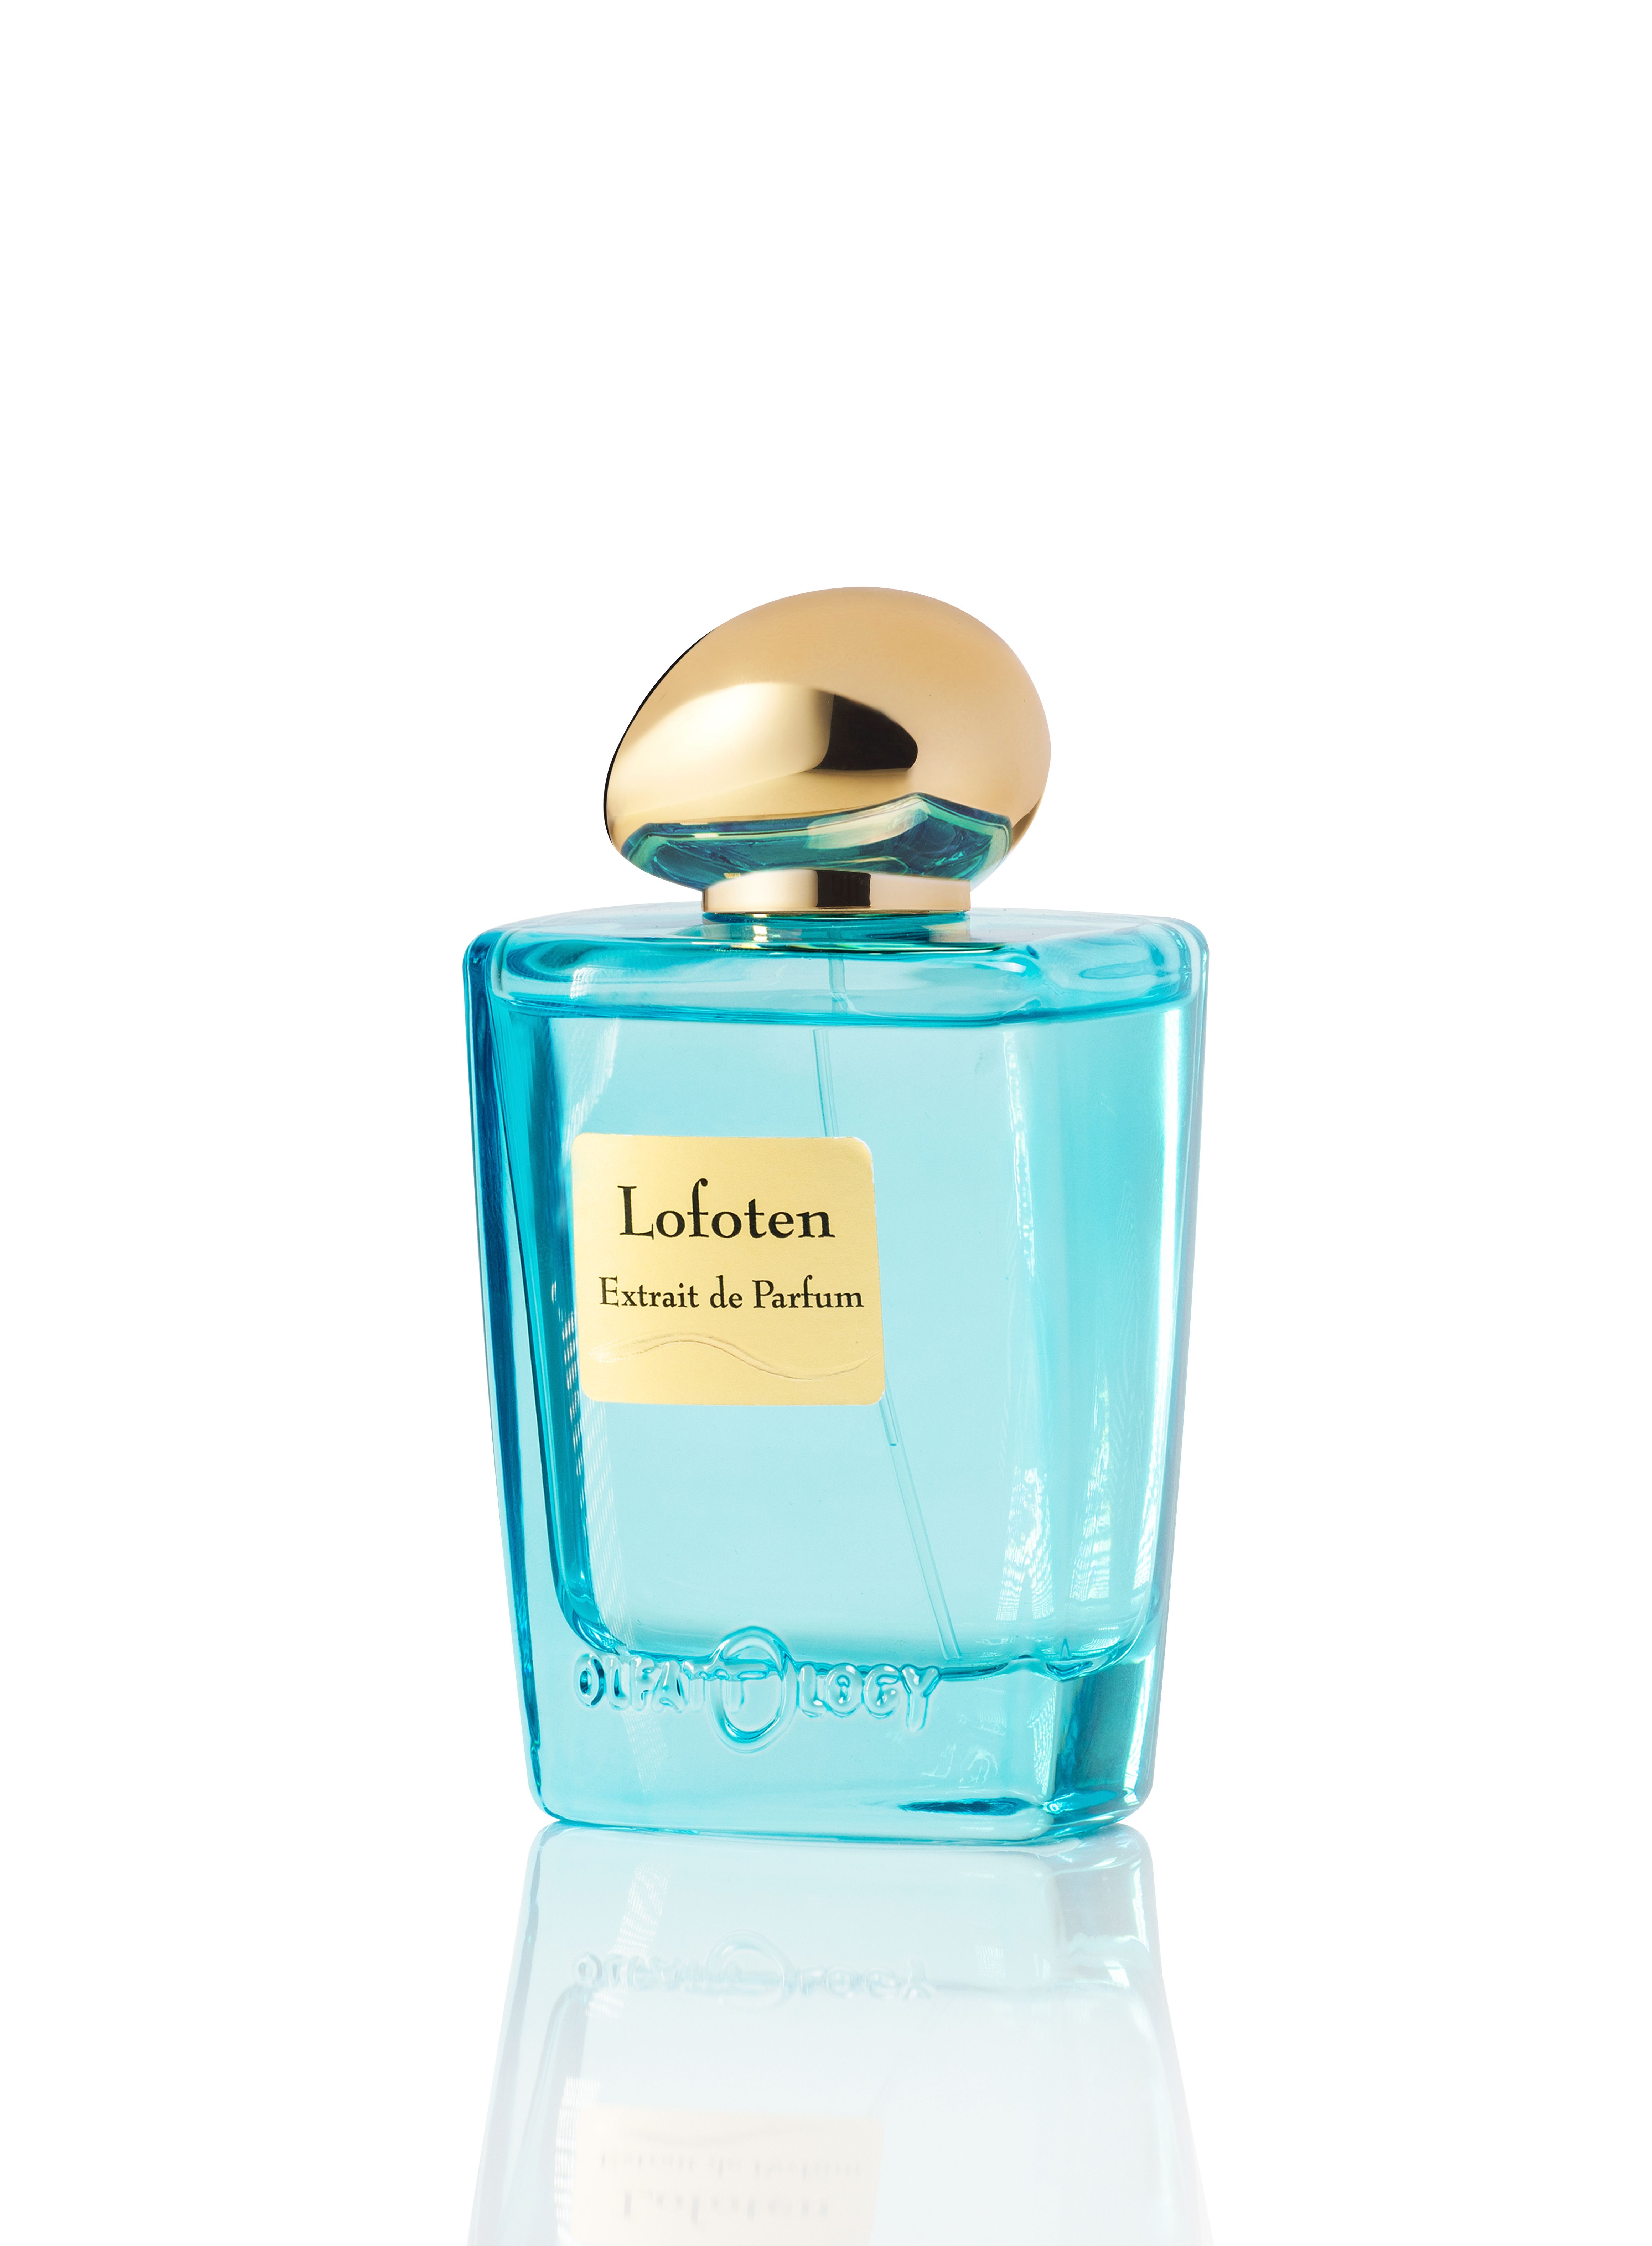 Lofoten Olfattology perfume - a new fragrance for women and men 2022